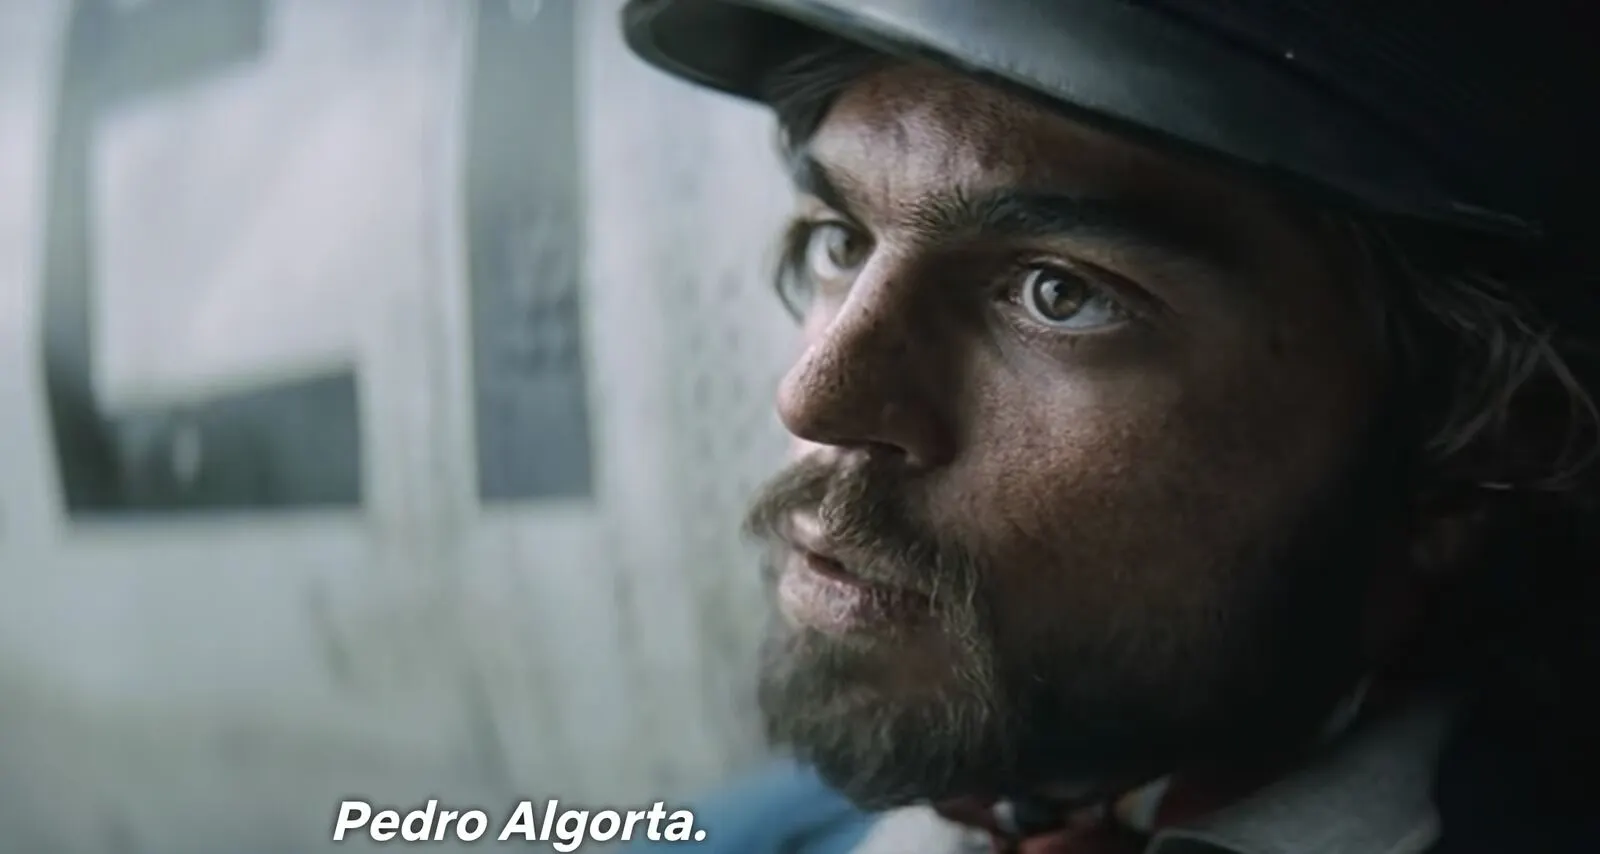 'Pedro Algorta' Andes Plane Crash Survivor, Real Image, Where Is He Now?